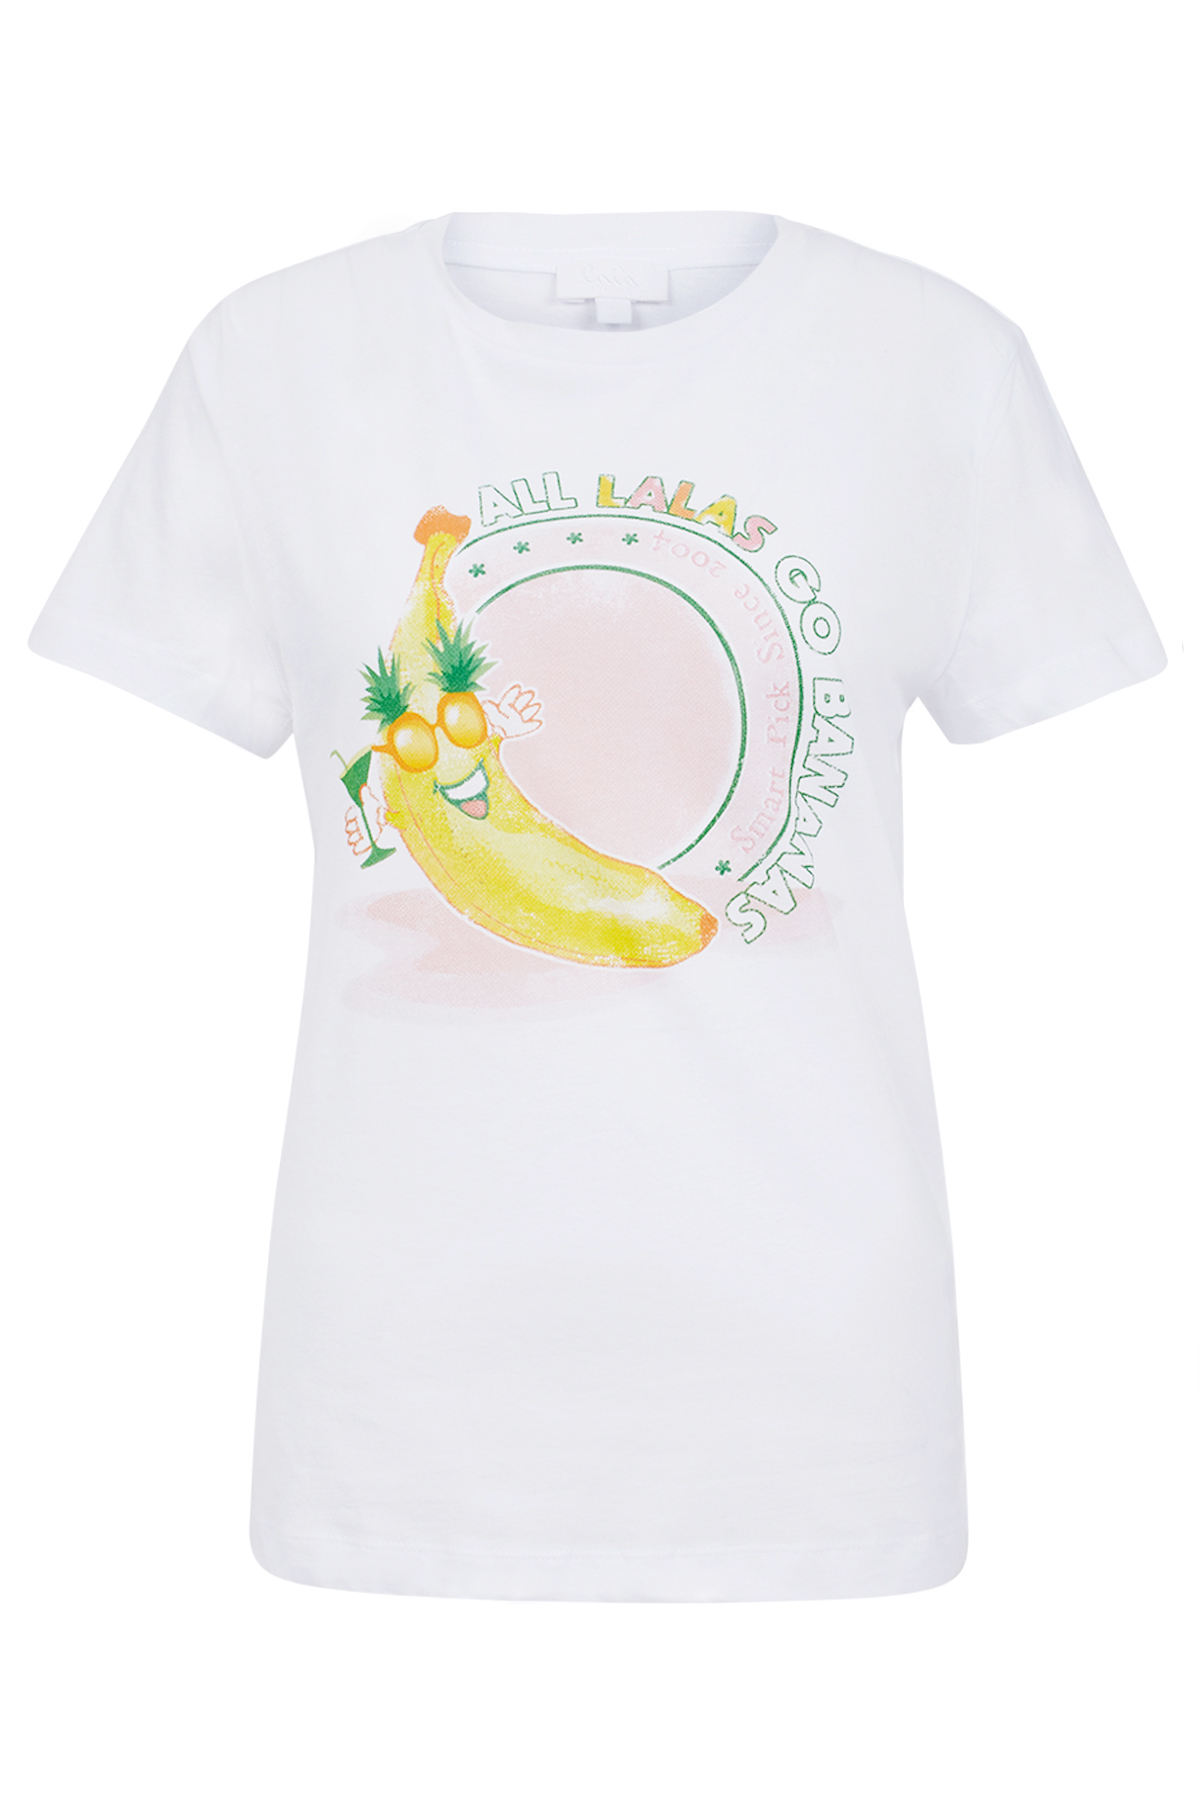 T-Shirt Cara Bananas